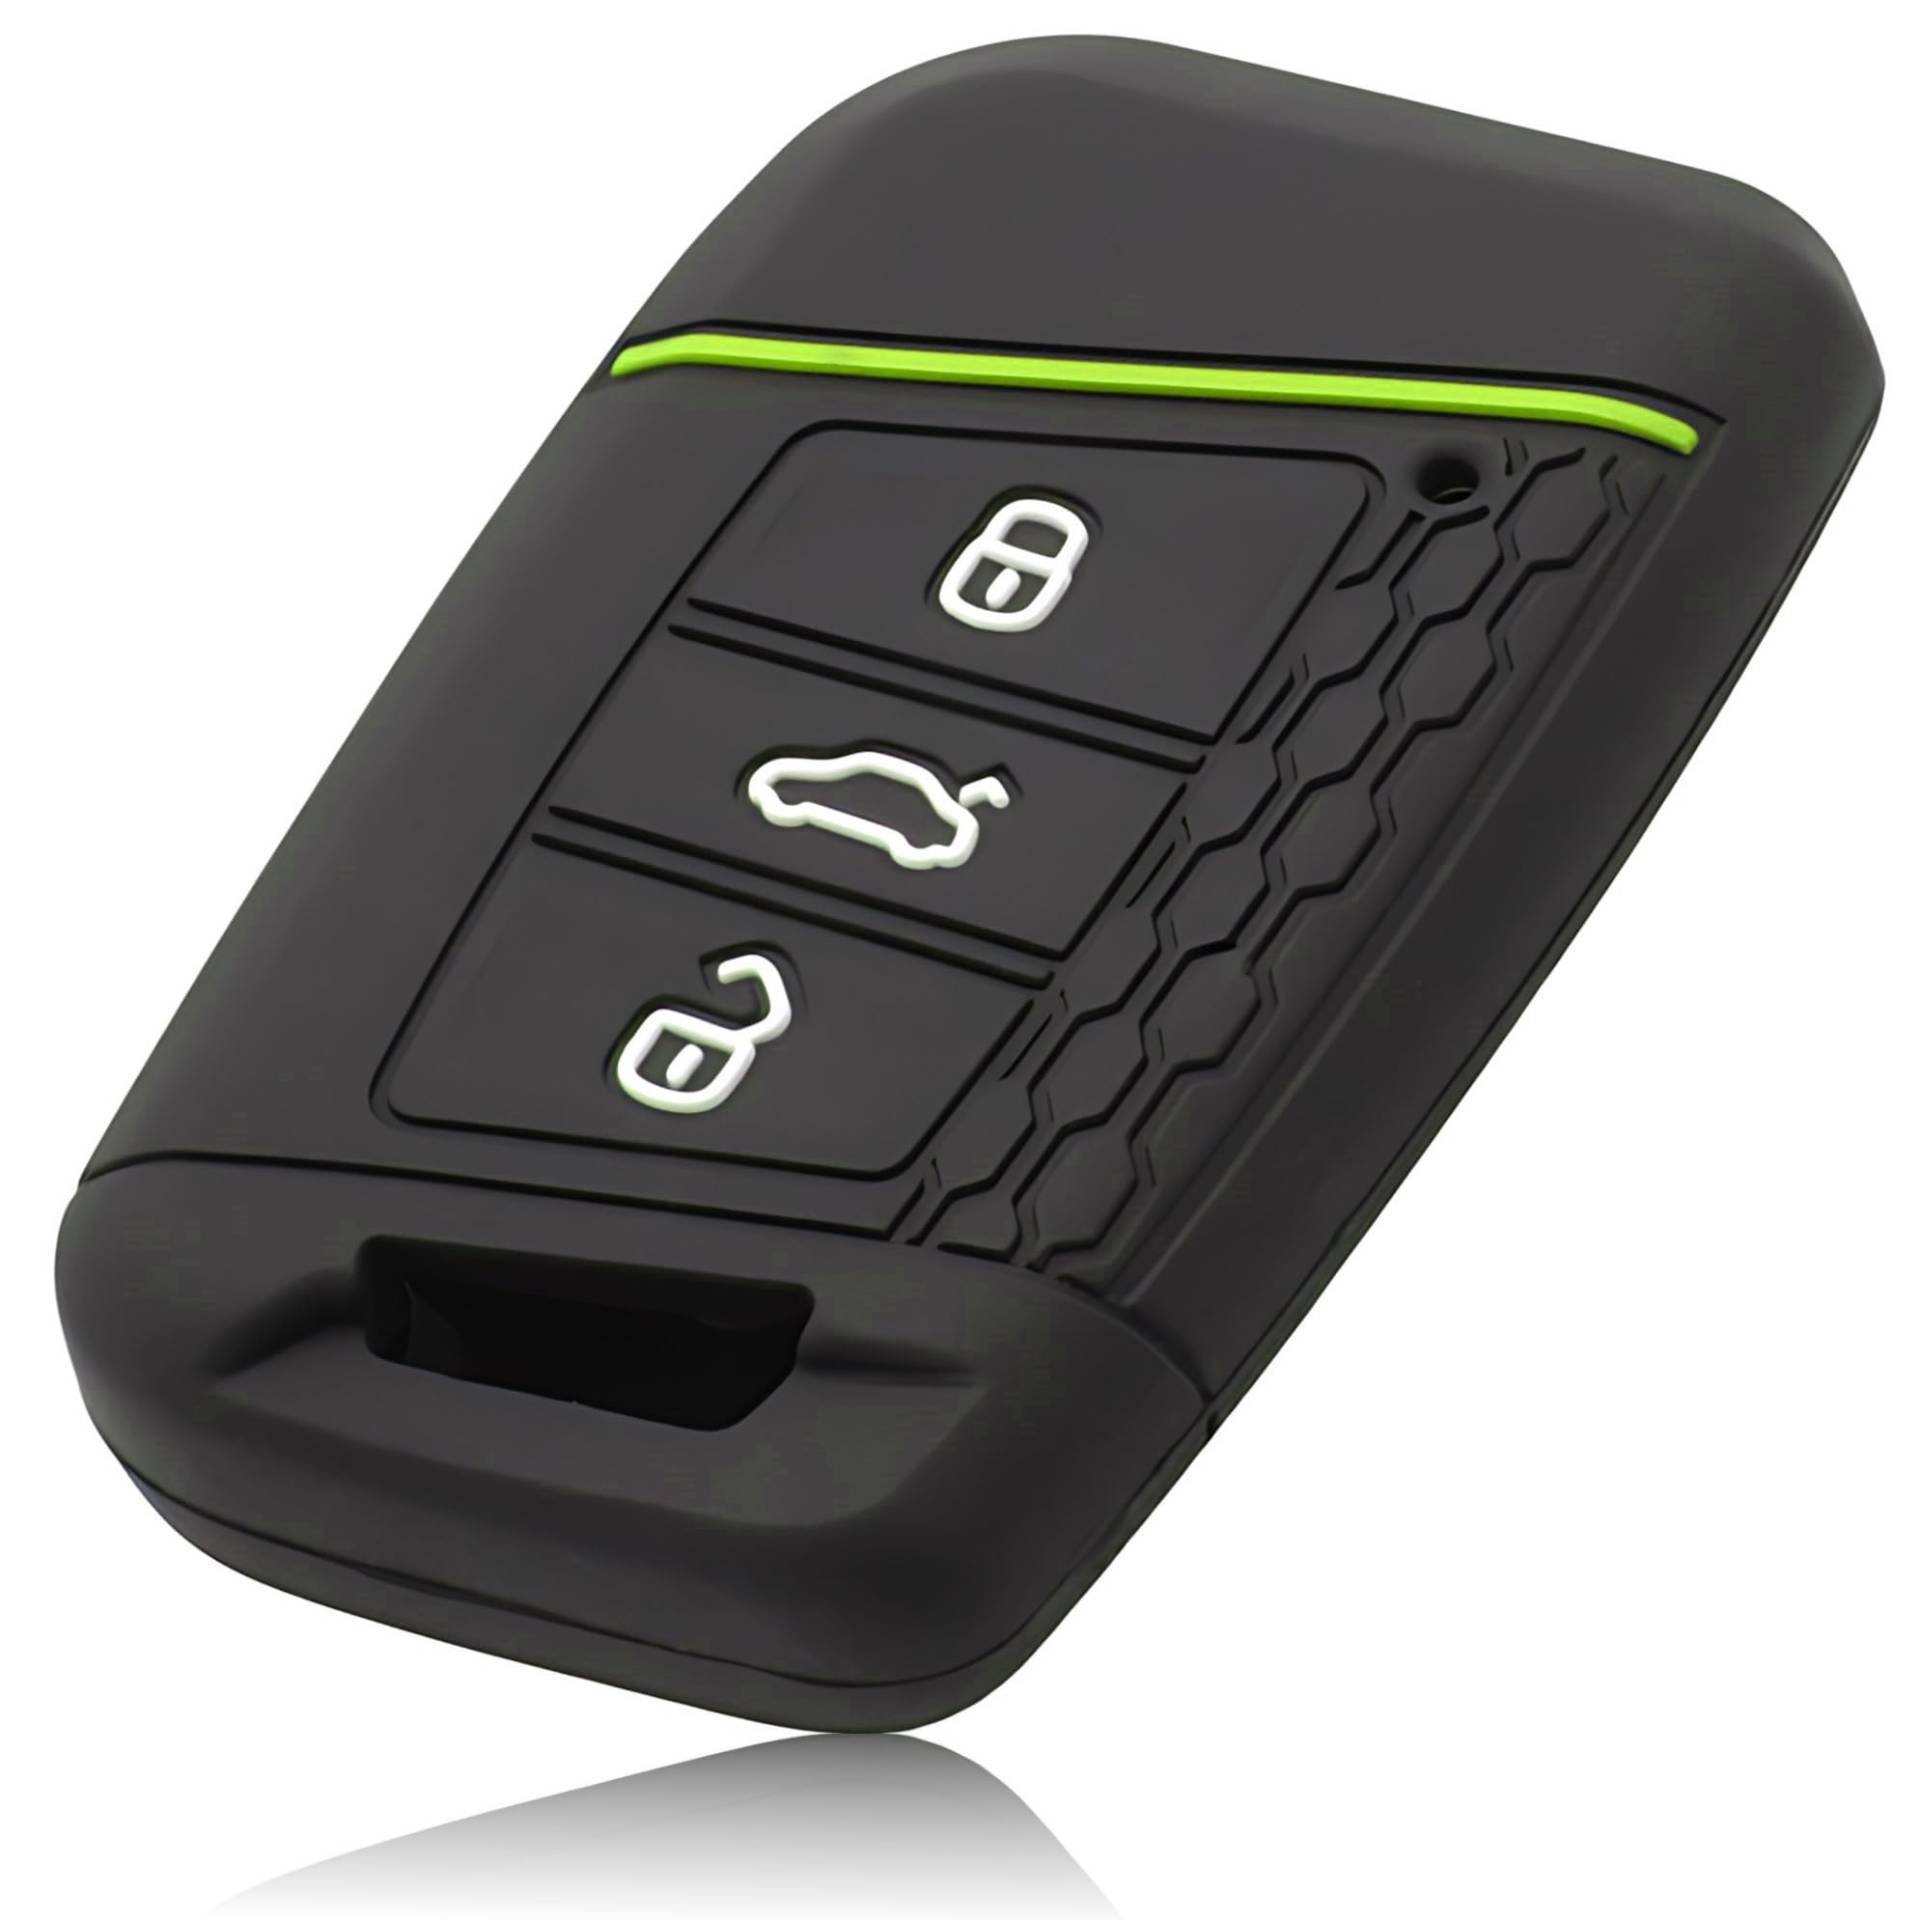 FOAMO Autoschlüssel Hülle Kompatibel mit VW Passat B8, SEAT, Skoda Autoschlüssel - Silikon Schlüsselhülle - Schutz-Hülle für Autoschlüssel Schwarz-Apfel-Grün von FOAMO